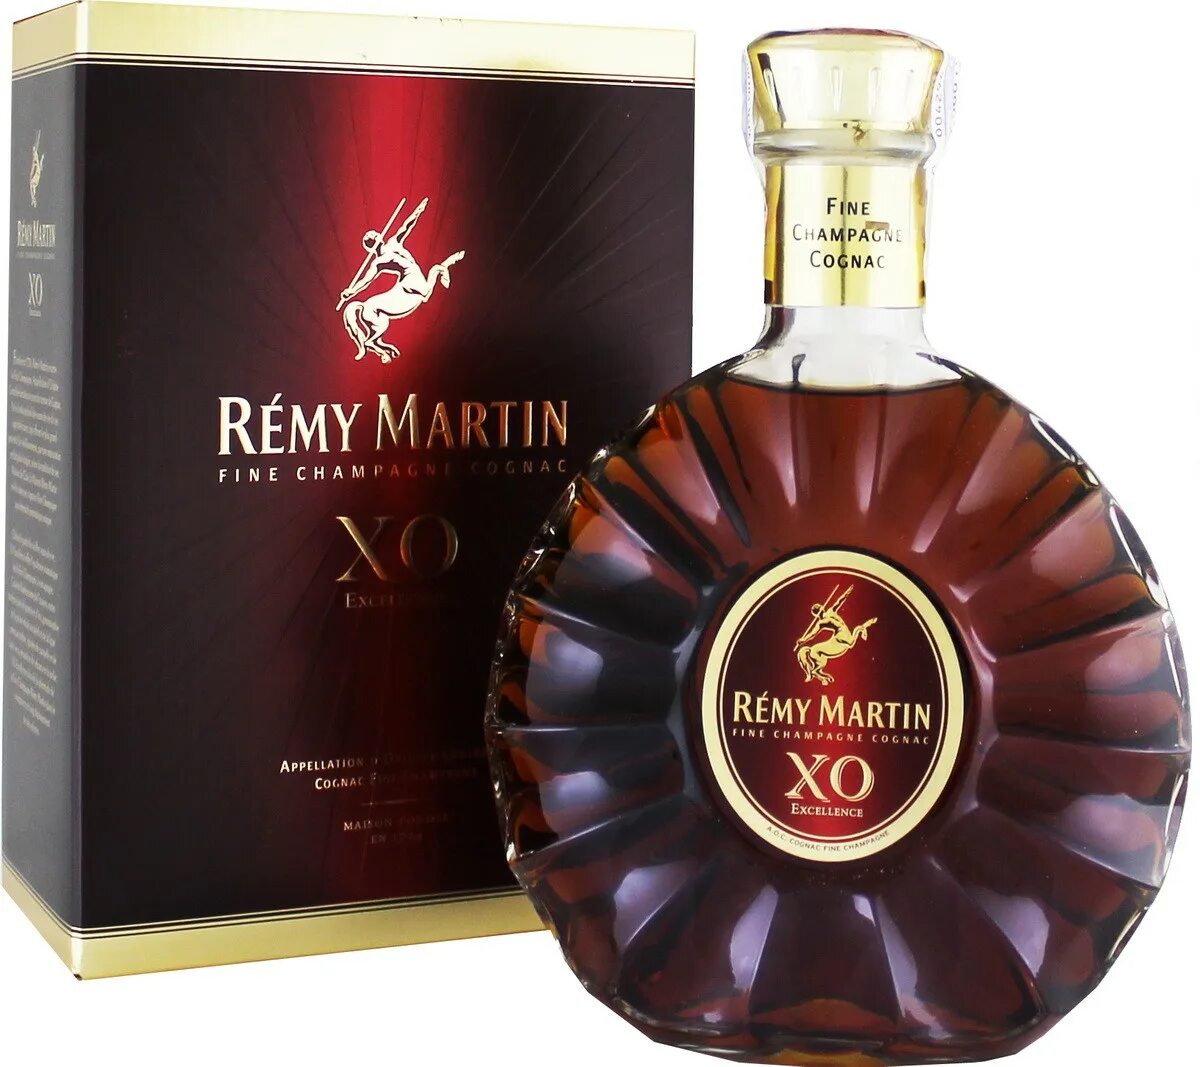 Remy martin 0.5